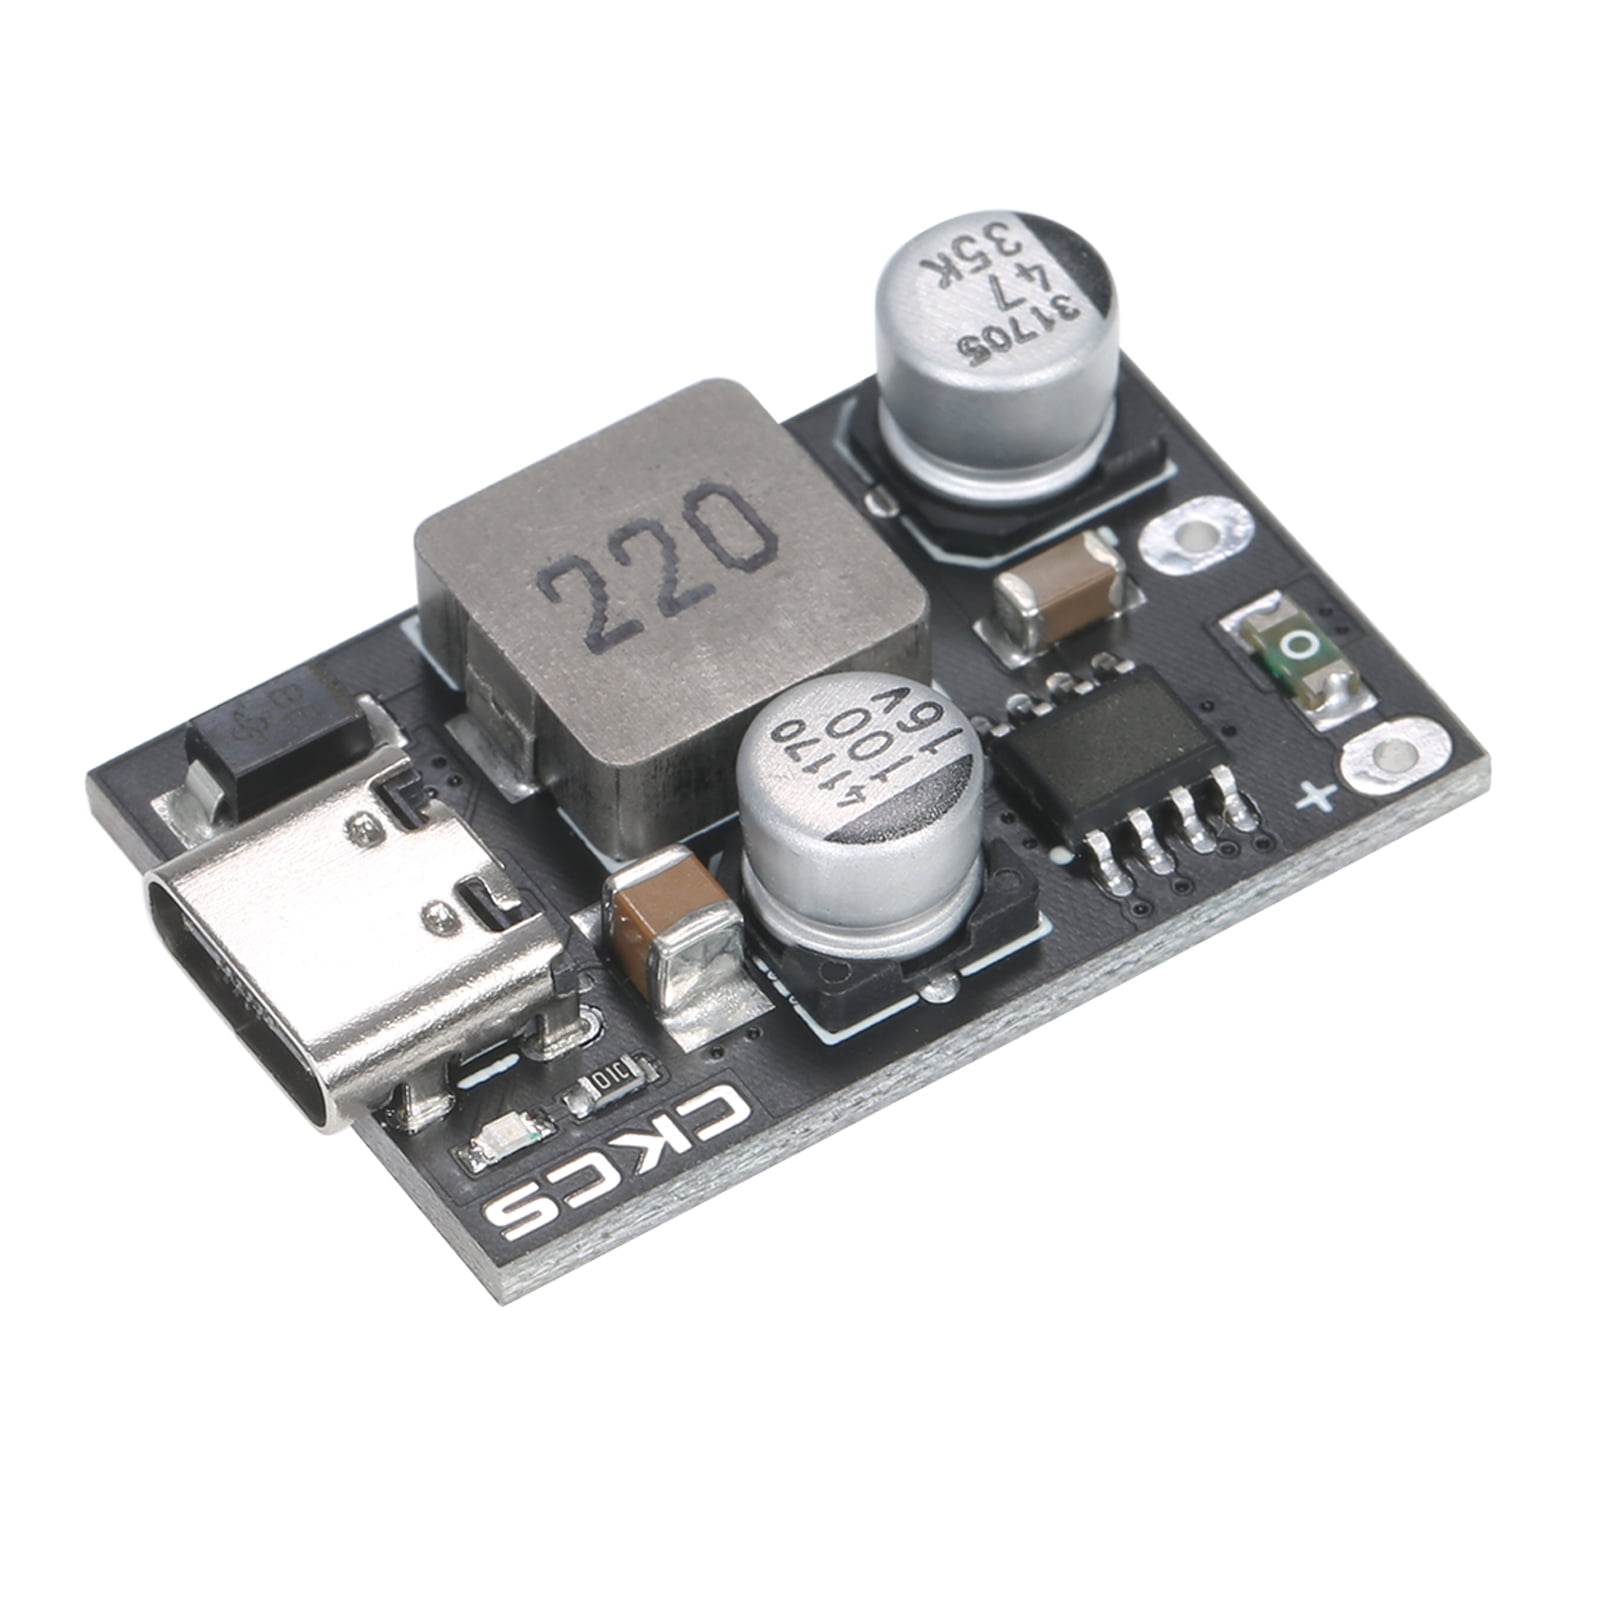 KKmoon LCD Digital Programmierbare Konstantspannung Aktuelle Step-Down Power Supply Modul DC 0-32.00V/0-12.00A¡­